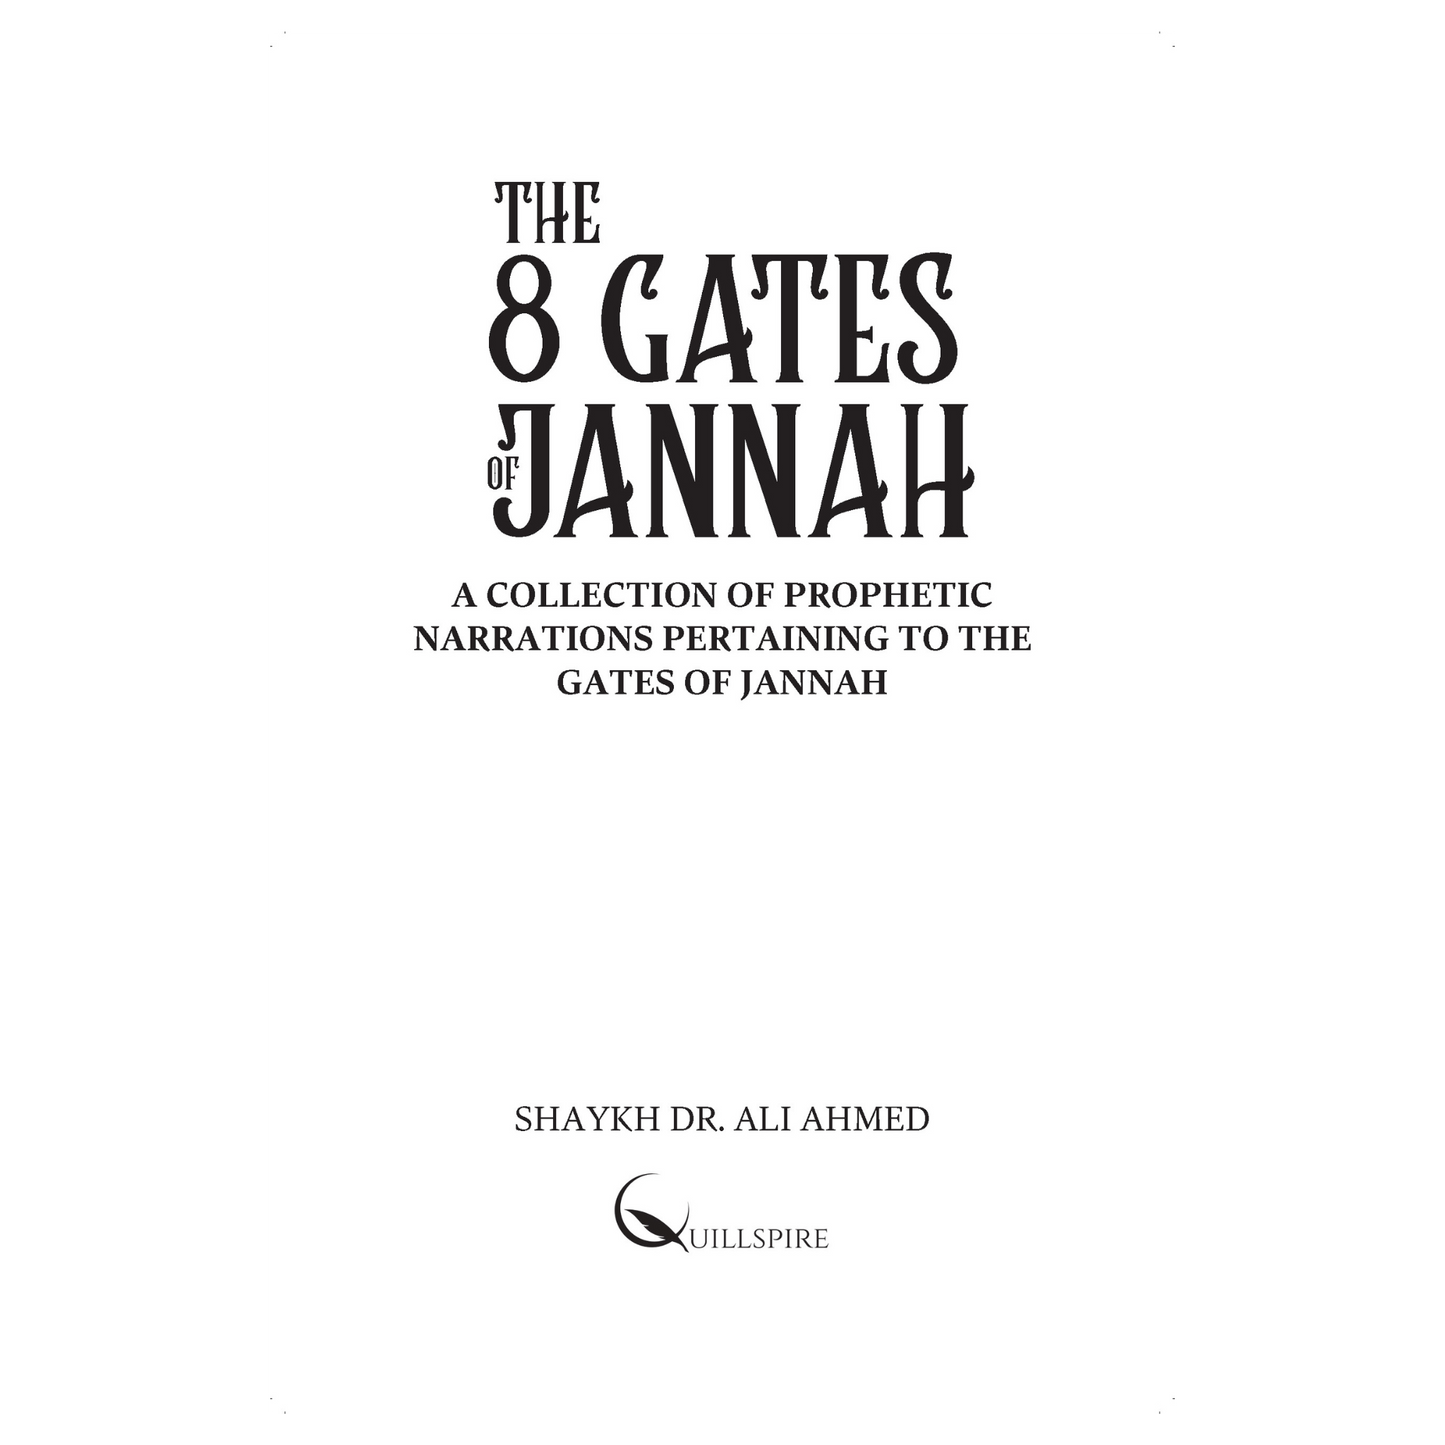 The 8 Gates of Jannah